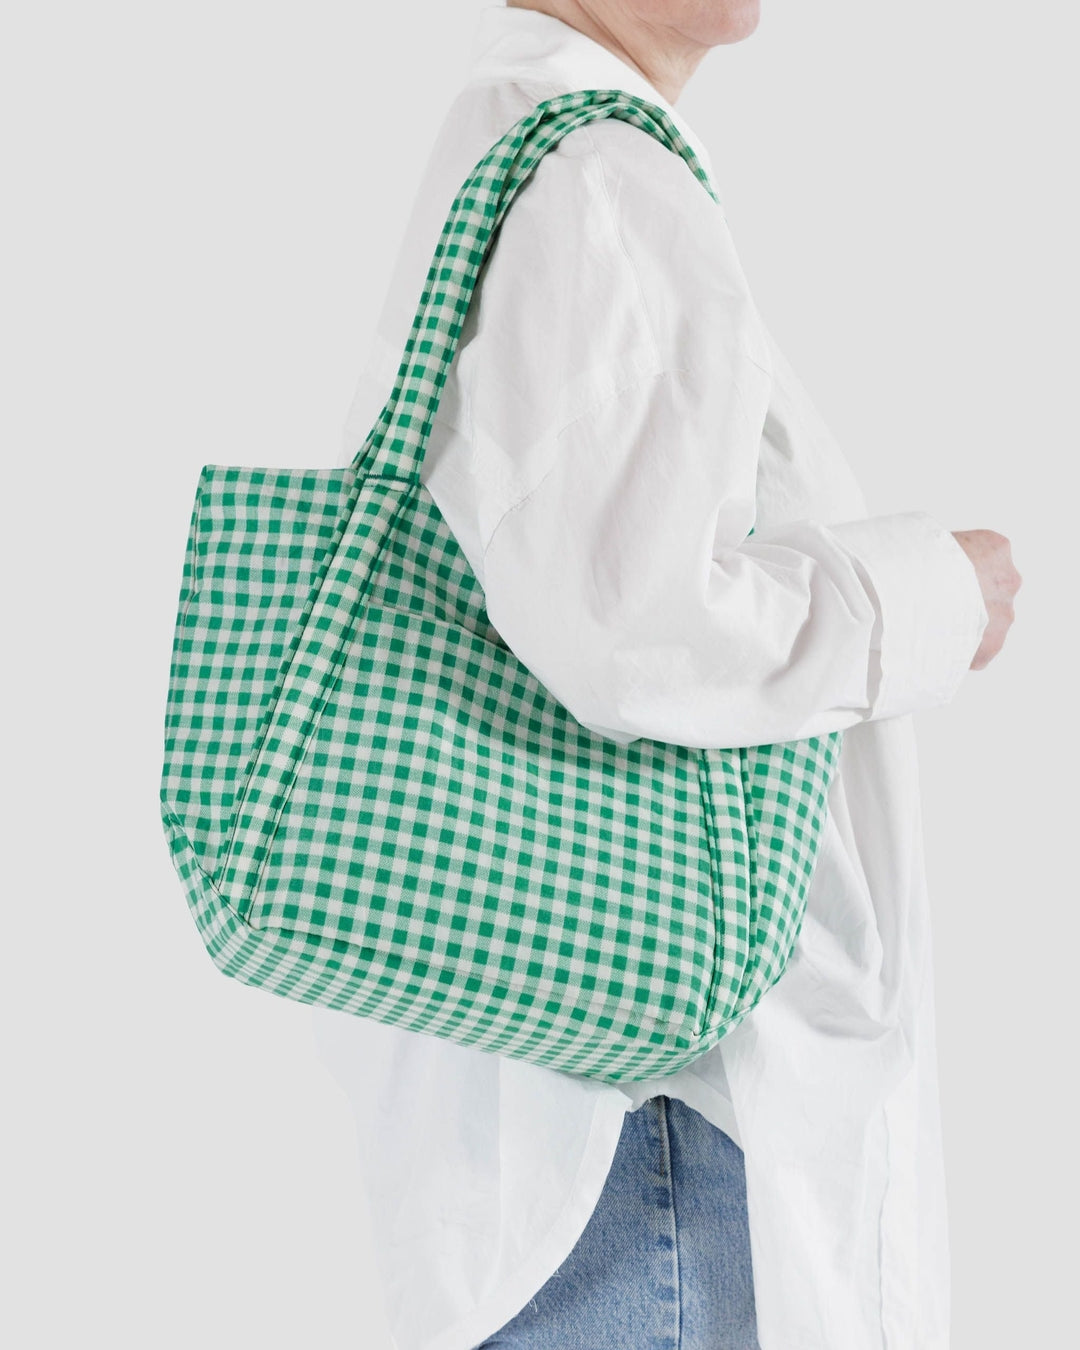 Cloud Bag Mini - Green Gingham [PRE ORDER]